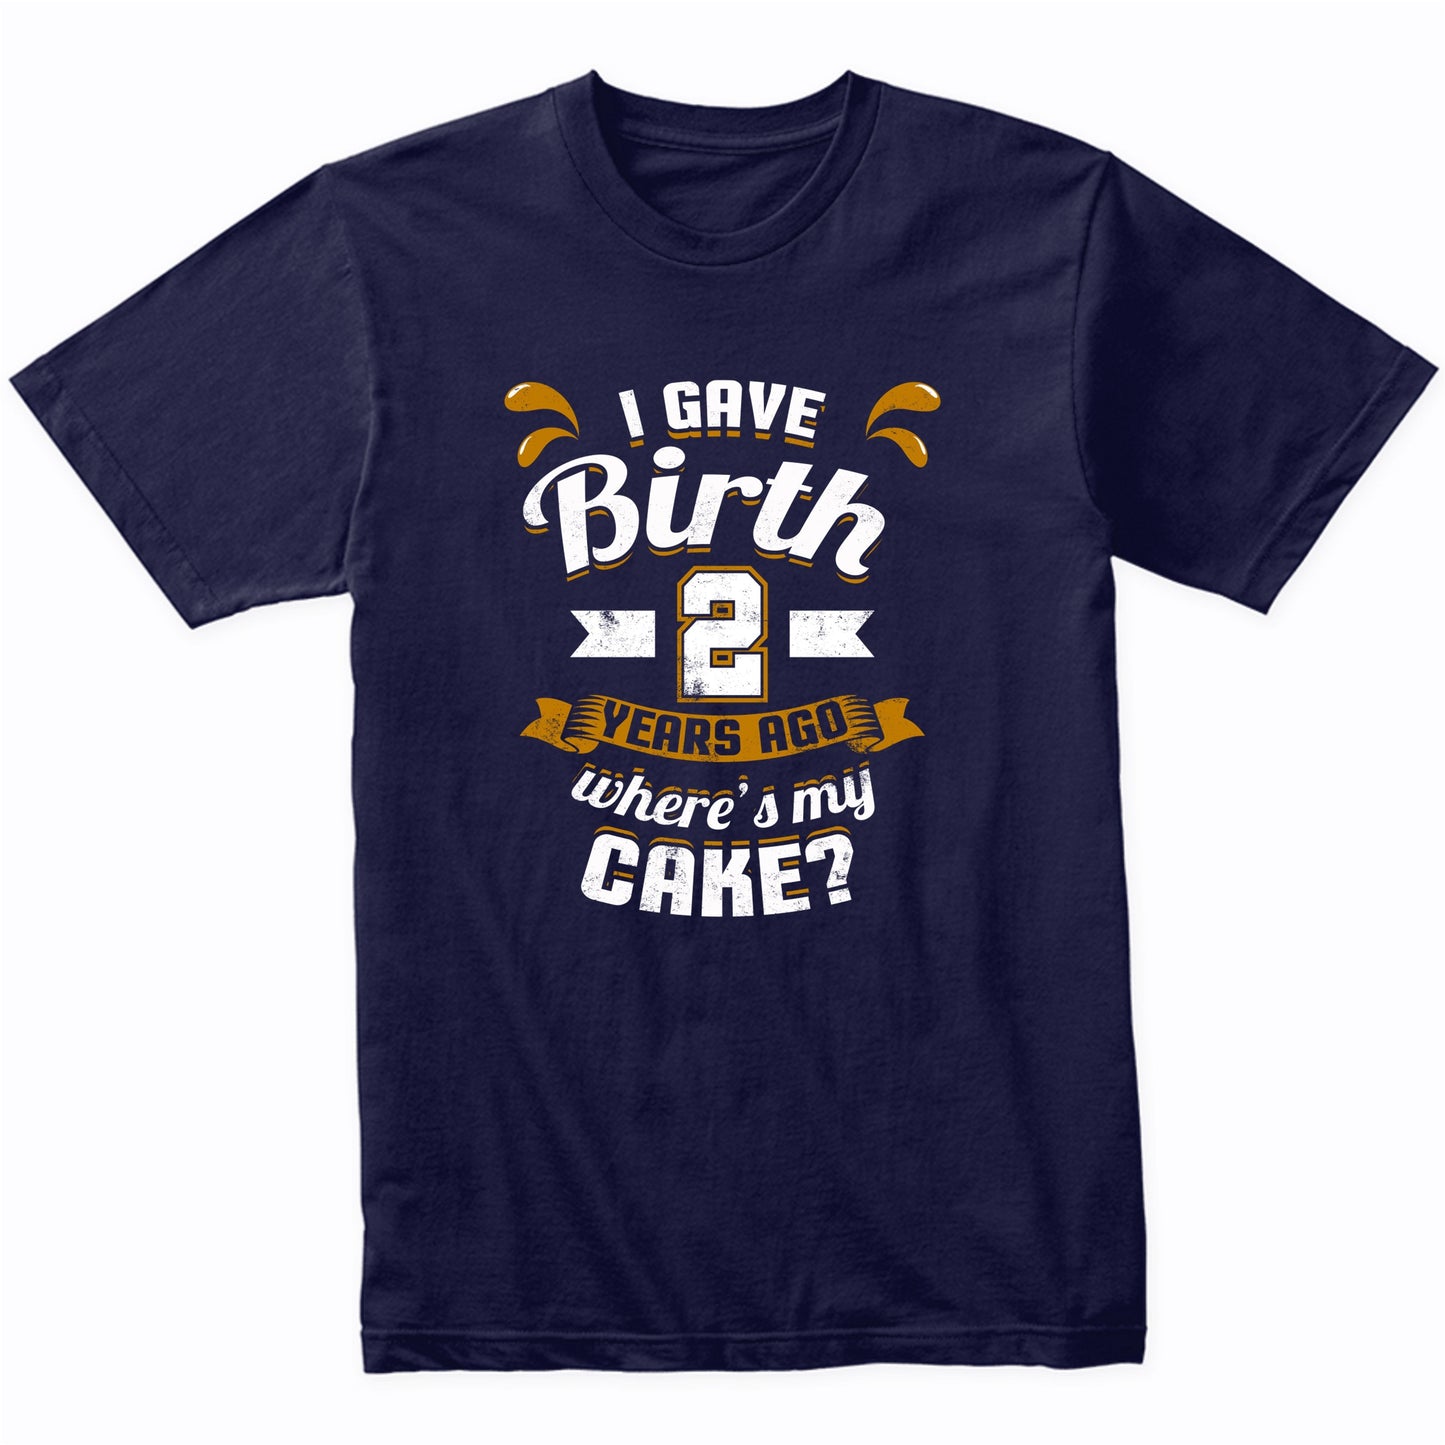 2nd Birthday Shirt For Mom I Gave Birth 2 Years Ago Where's My Cake?